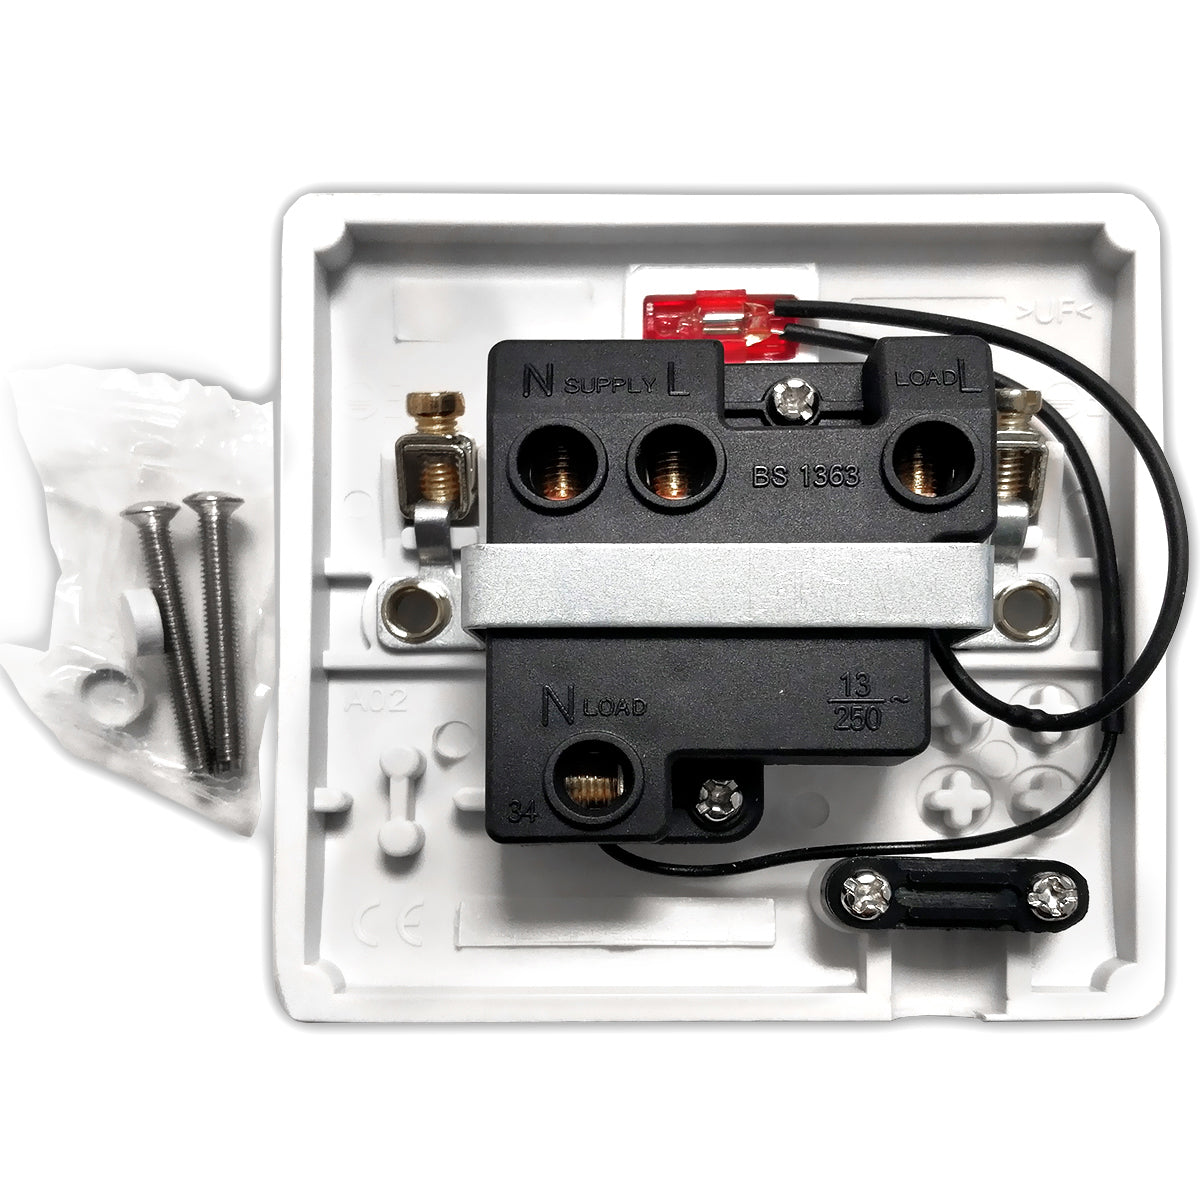 Bathroom Socket - Fused Spur Connection Unit - 13A - White Standard